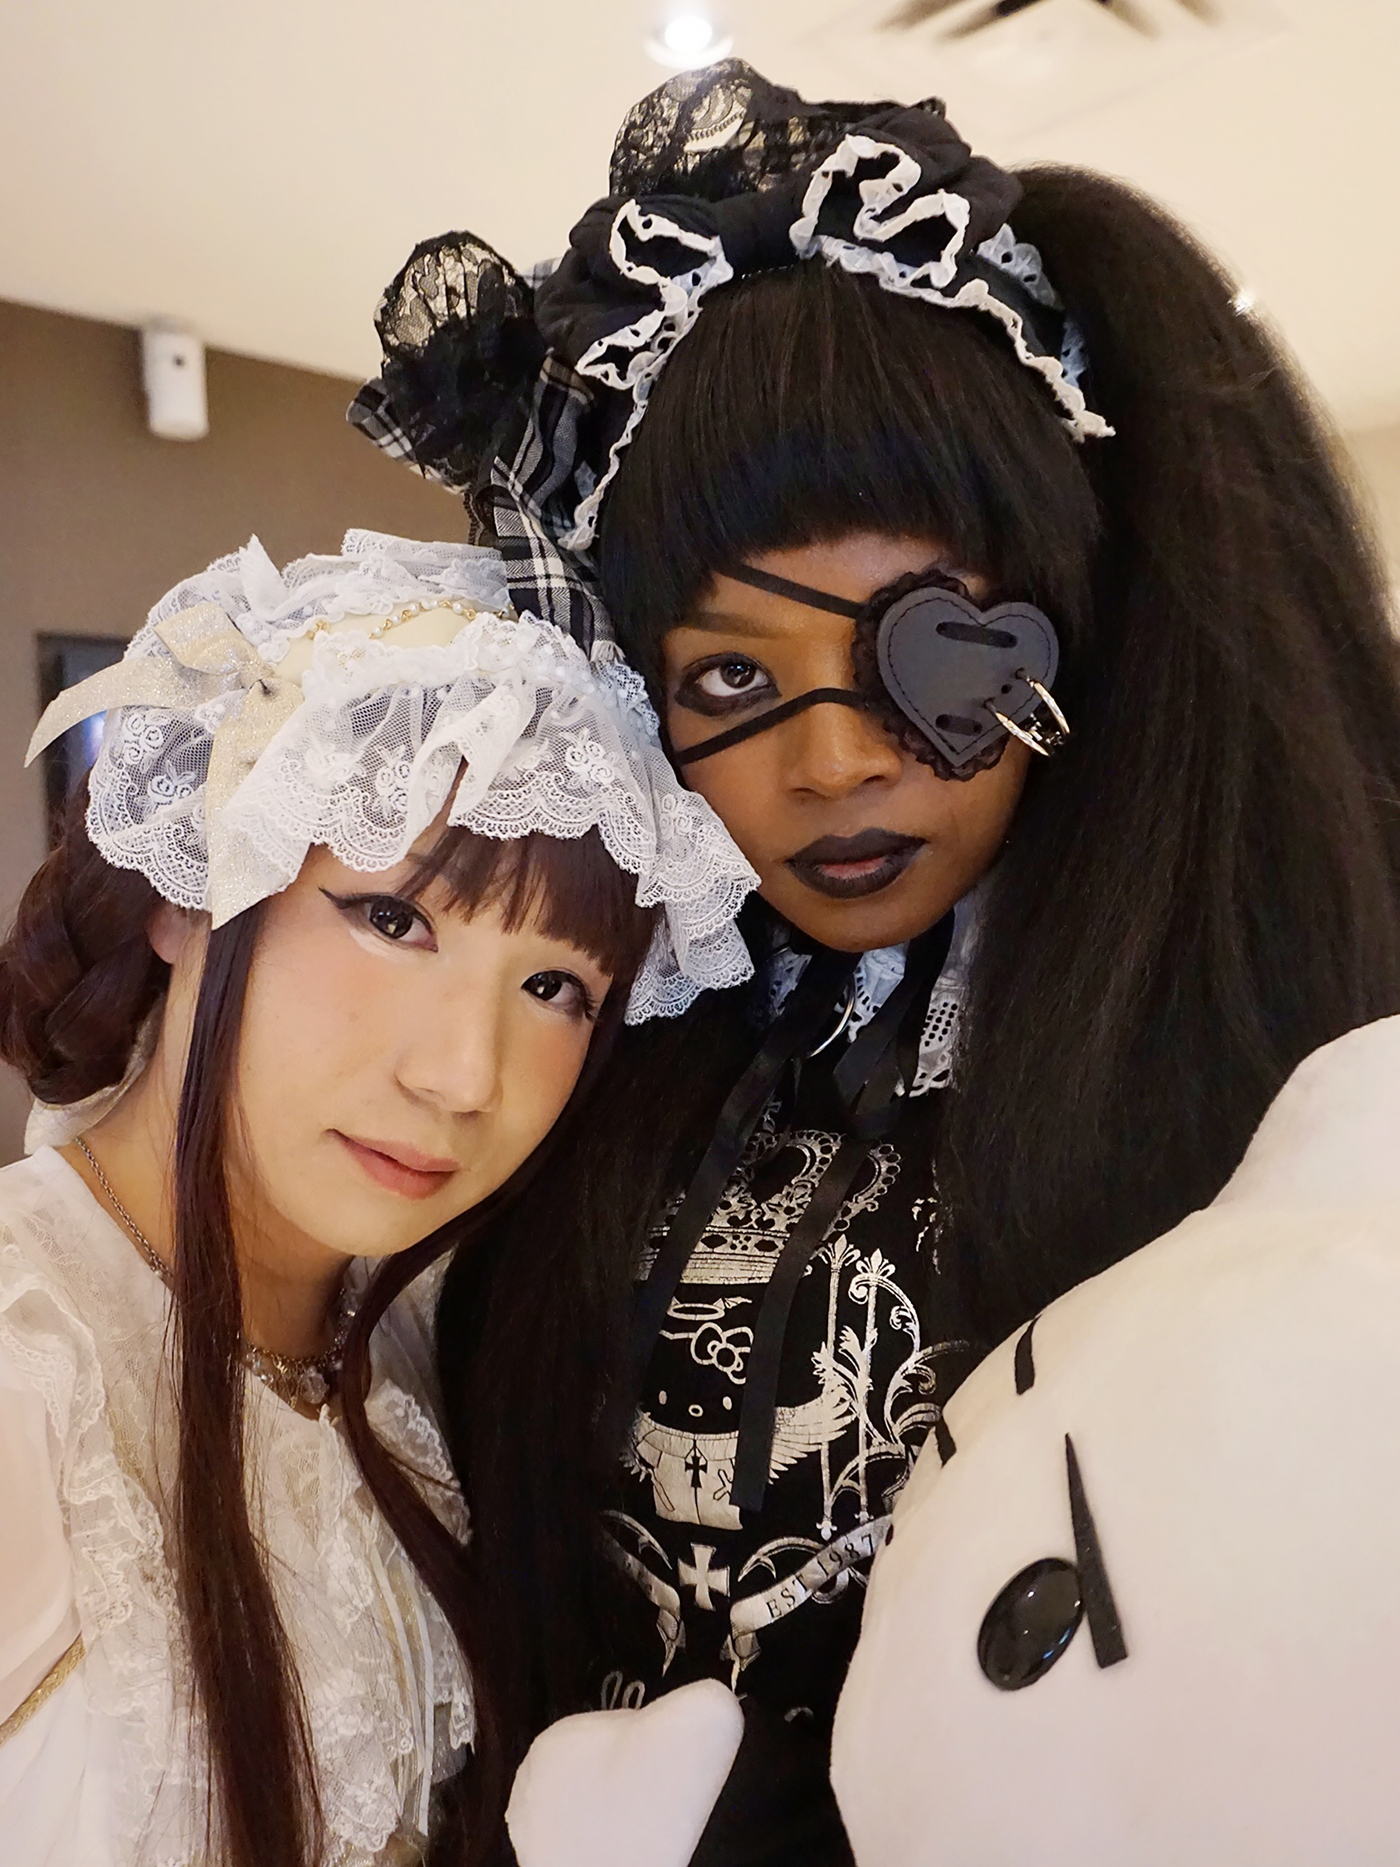 Schoolgirl Asian Solo - Maiden's Armorâ€: Global Gothic Lolita Fashion Communities and Technologies  of Girly Counteridentity | Theatre Survey | Cambridge Core